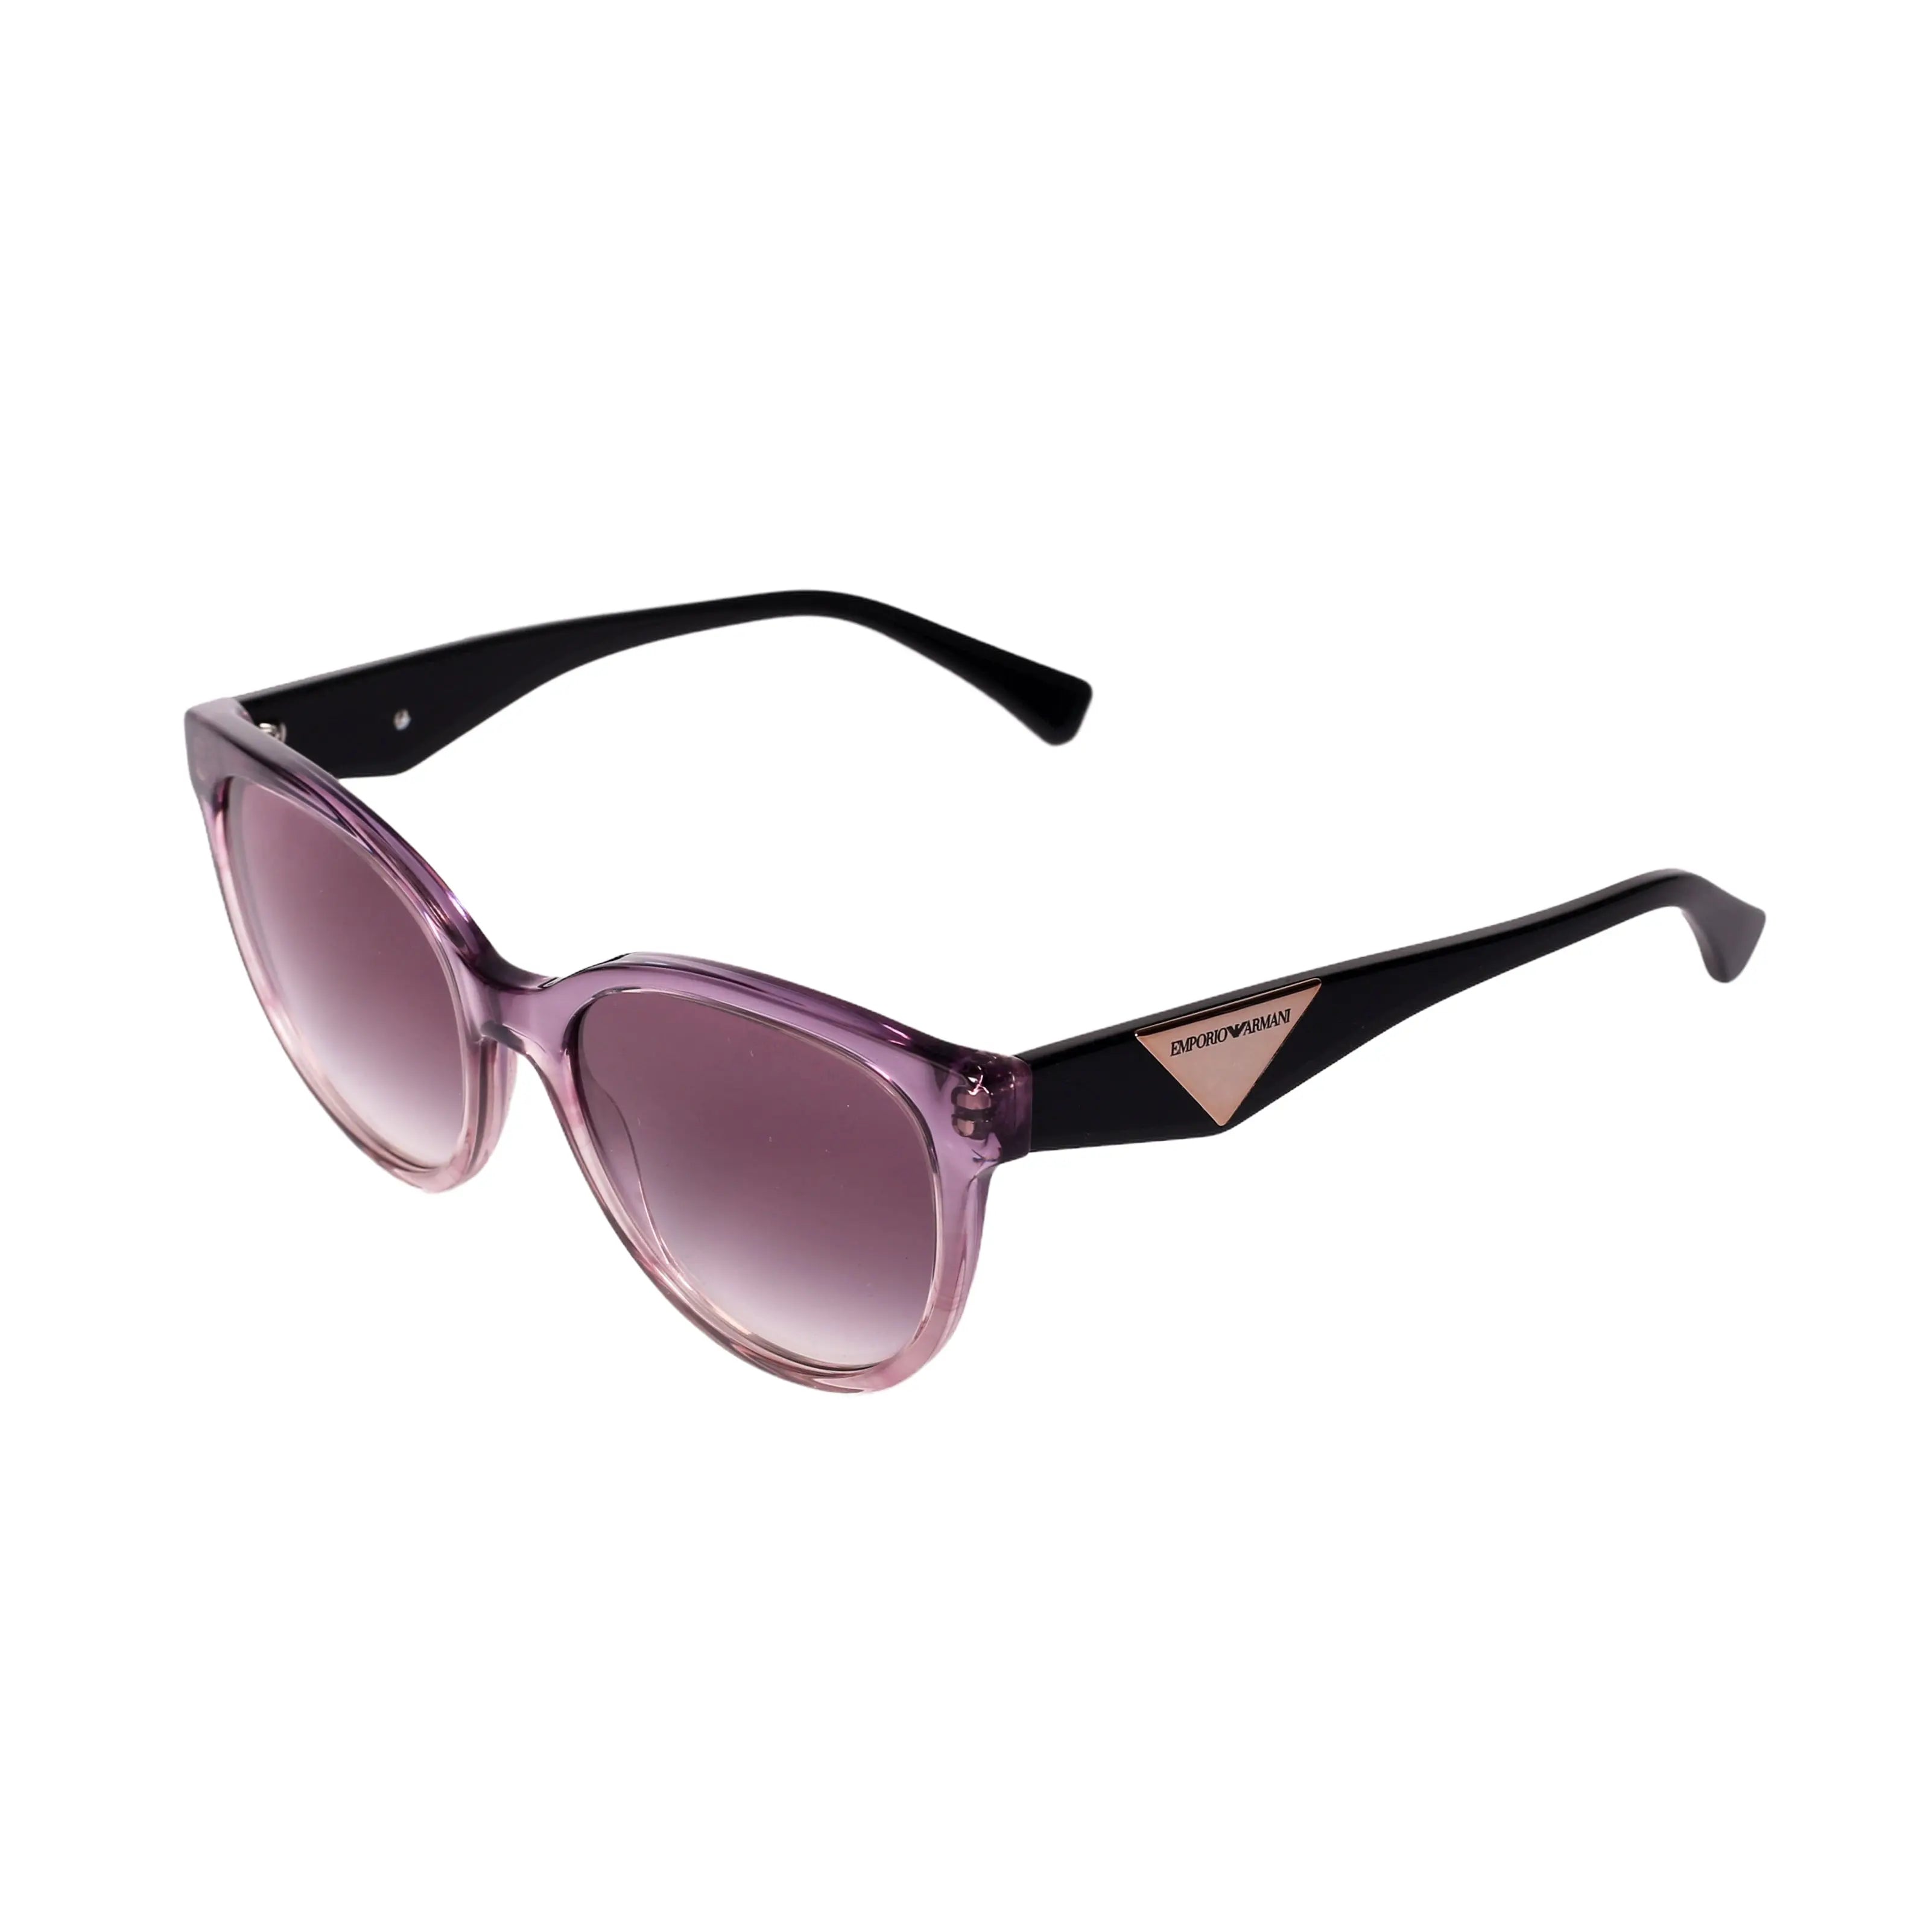 Emporio Armani-EA 4140-55-5966 Sunglasses - Premium Sunglasses from Emporio Armani - Just Rs. 12790! Shop now at Laxmi Opticians